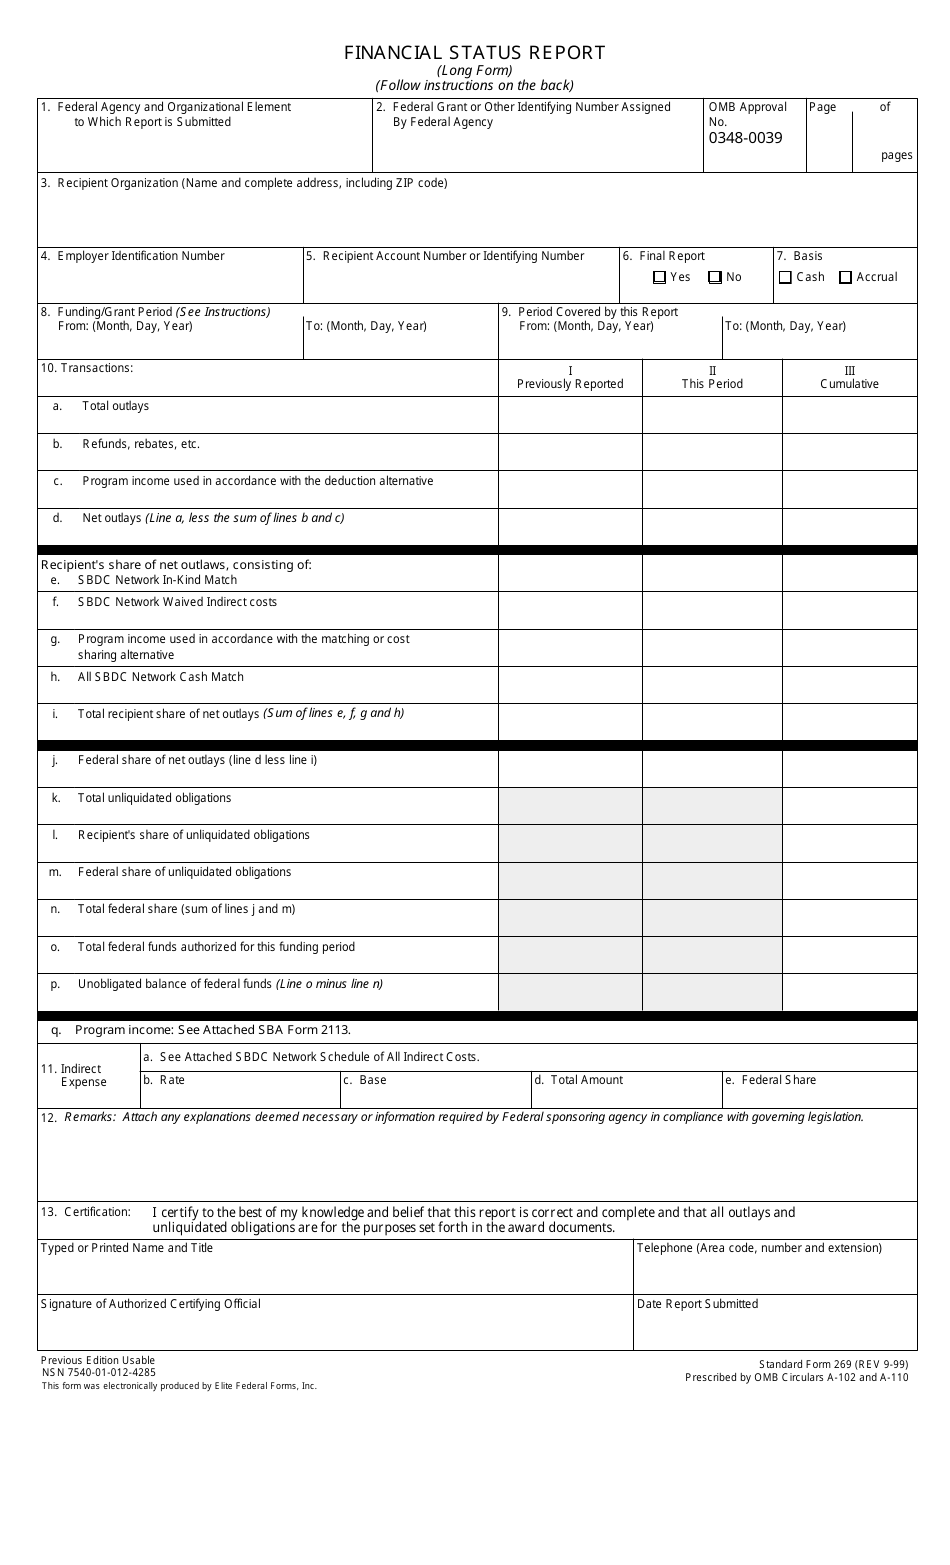 SBA Form SF-269 Financial Status Report, Page 1